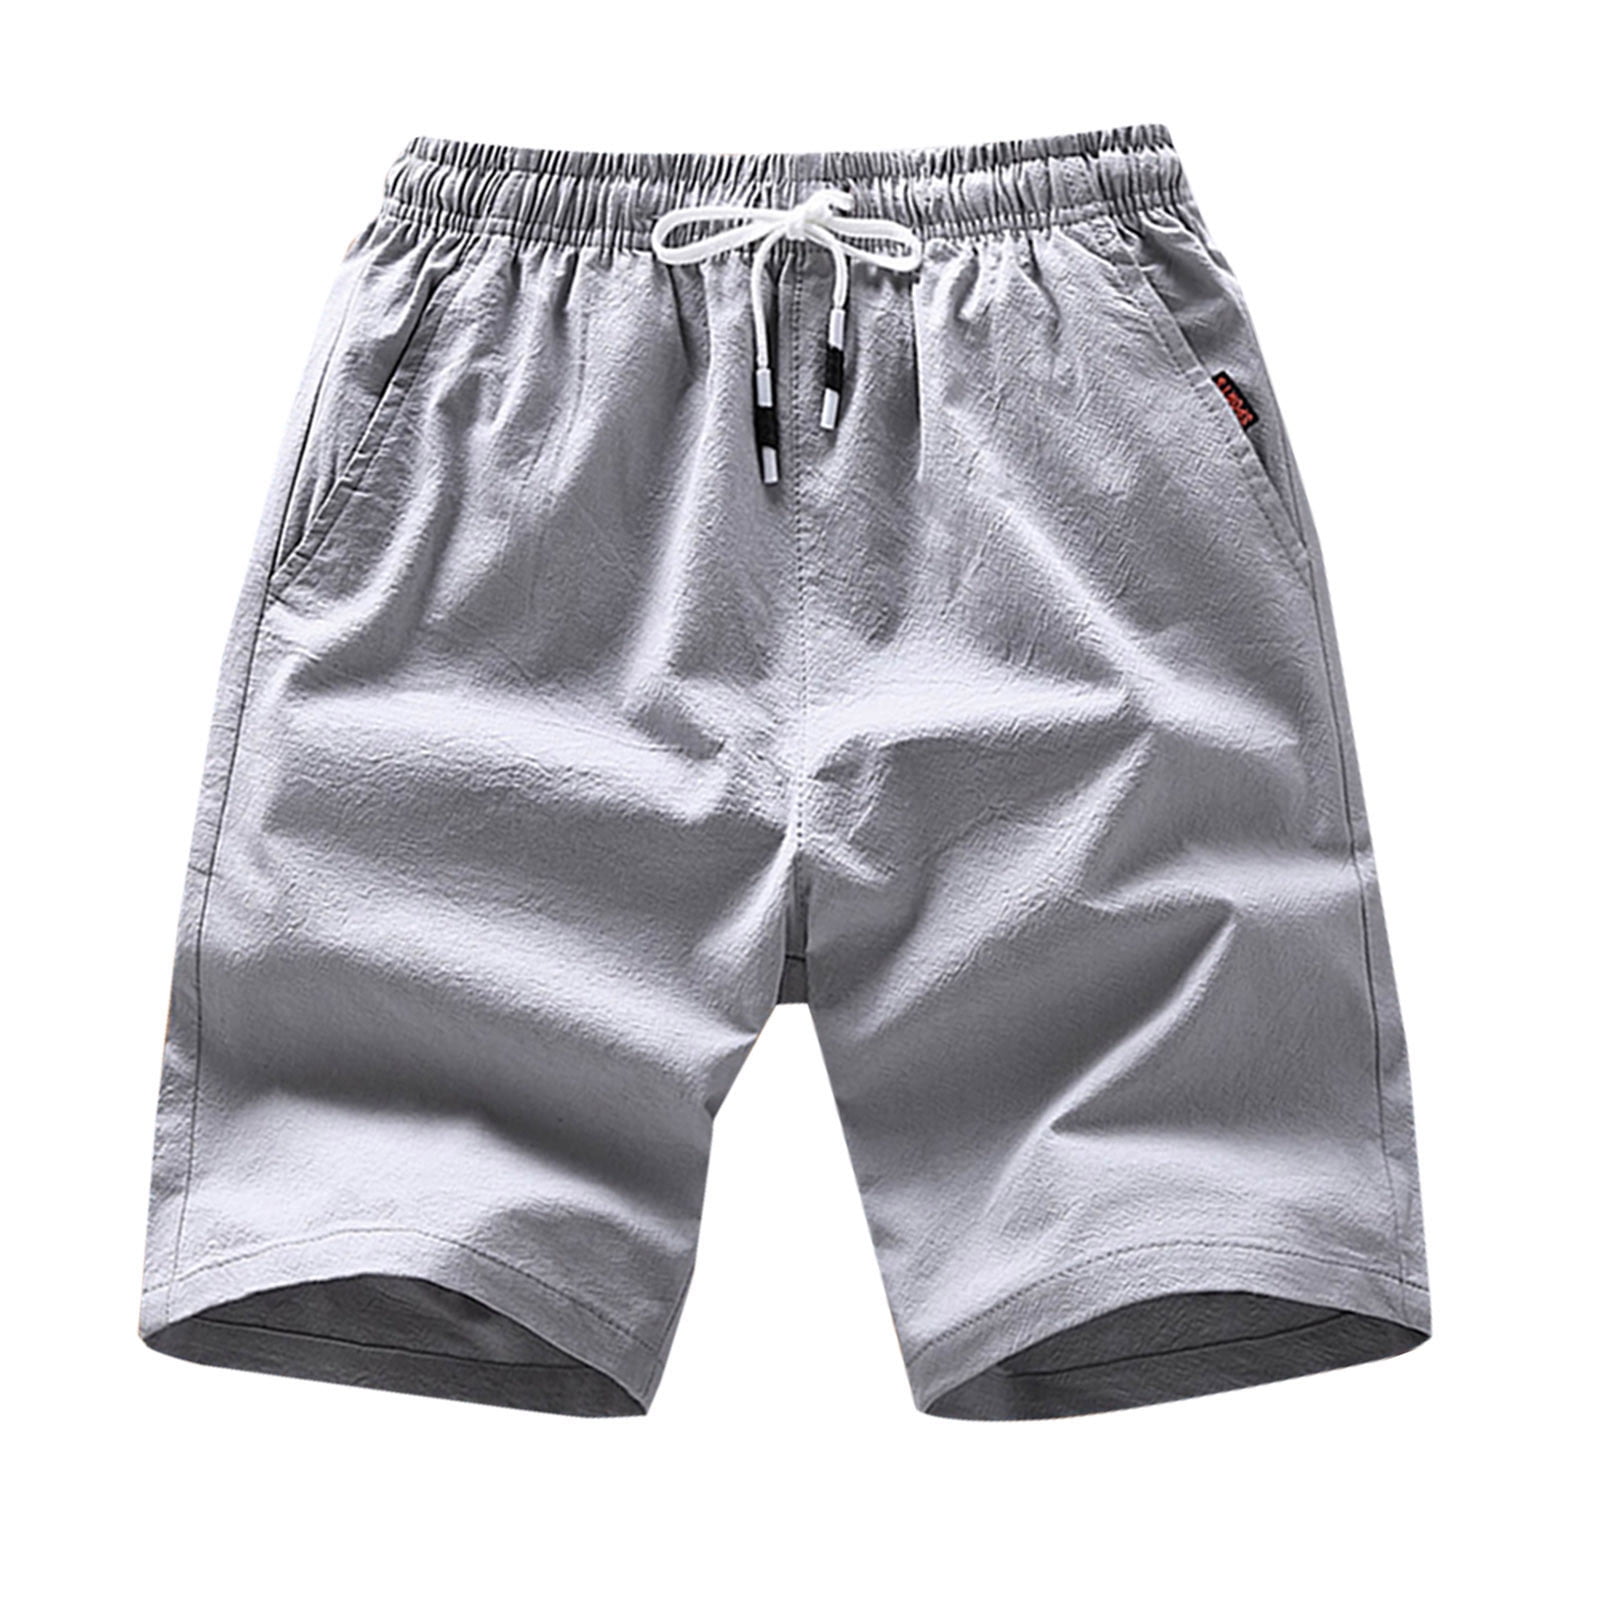 Ruimatai Men's Shorts Clearance Men's Short Pants Made Of Pure Cotton ...